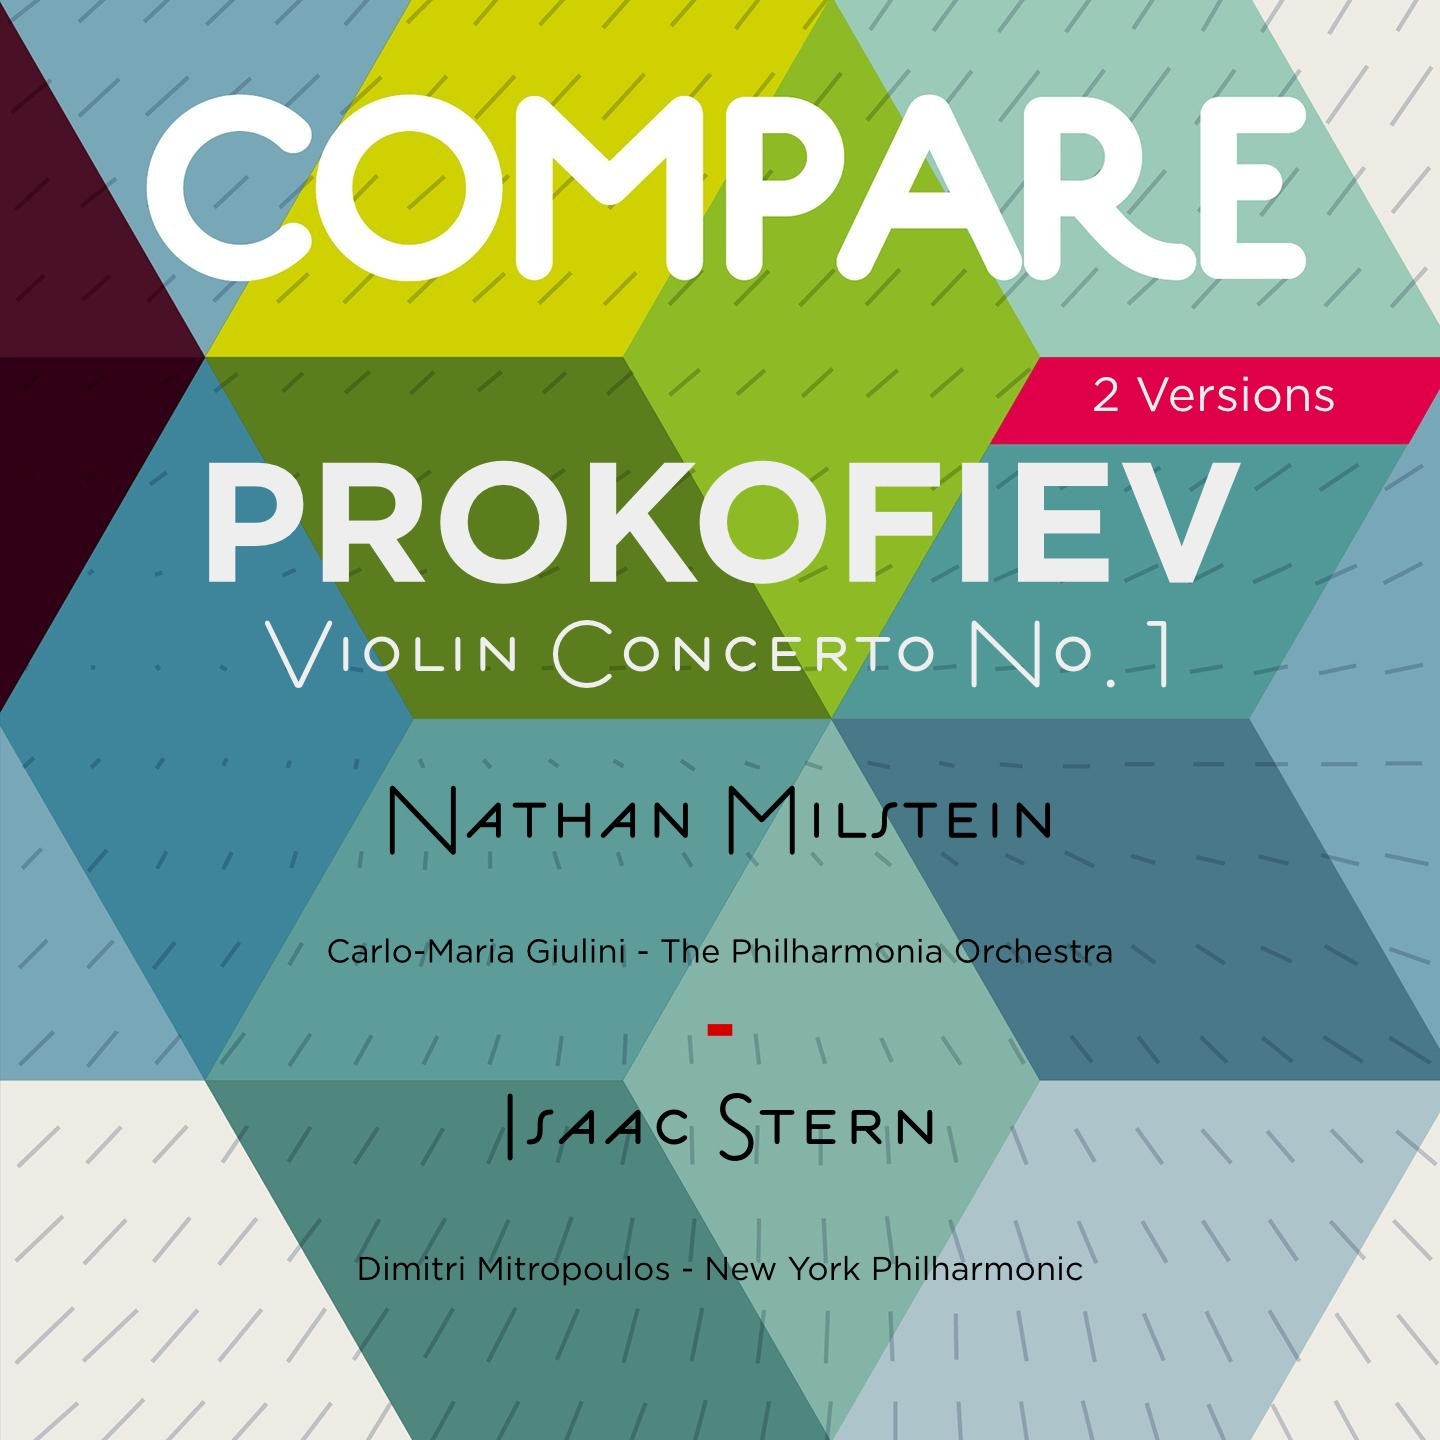 Violin Concerto No. 1 in D Major, Op. 19: I. Andantino